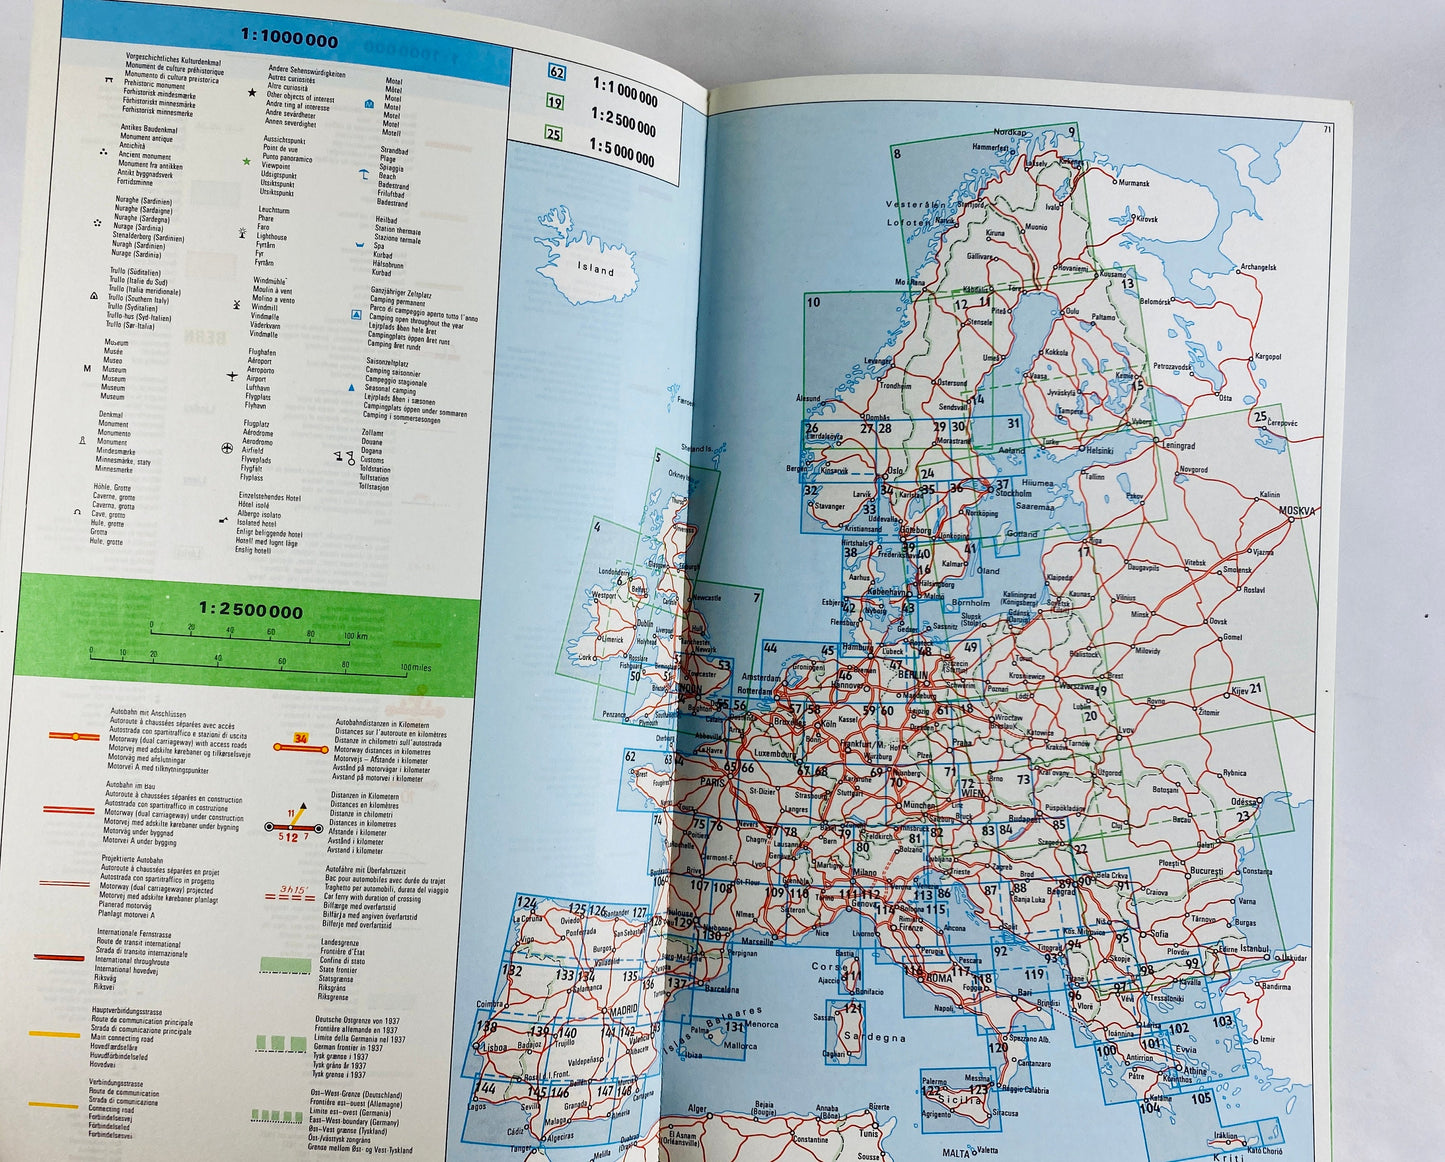 1970s Europa Vintage Europe atlas maps collectible souvenir. Europe Travel global expat gift.